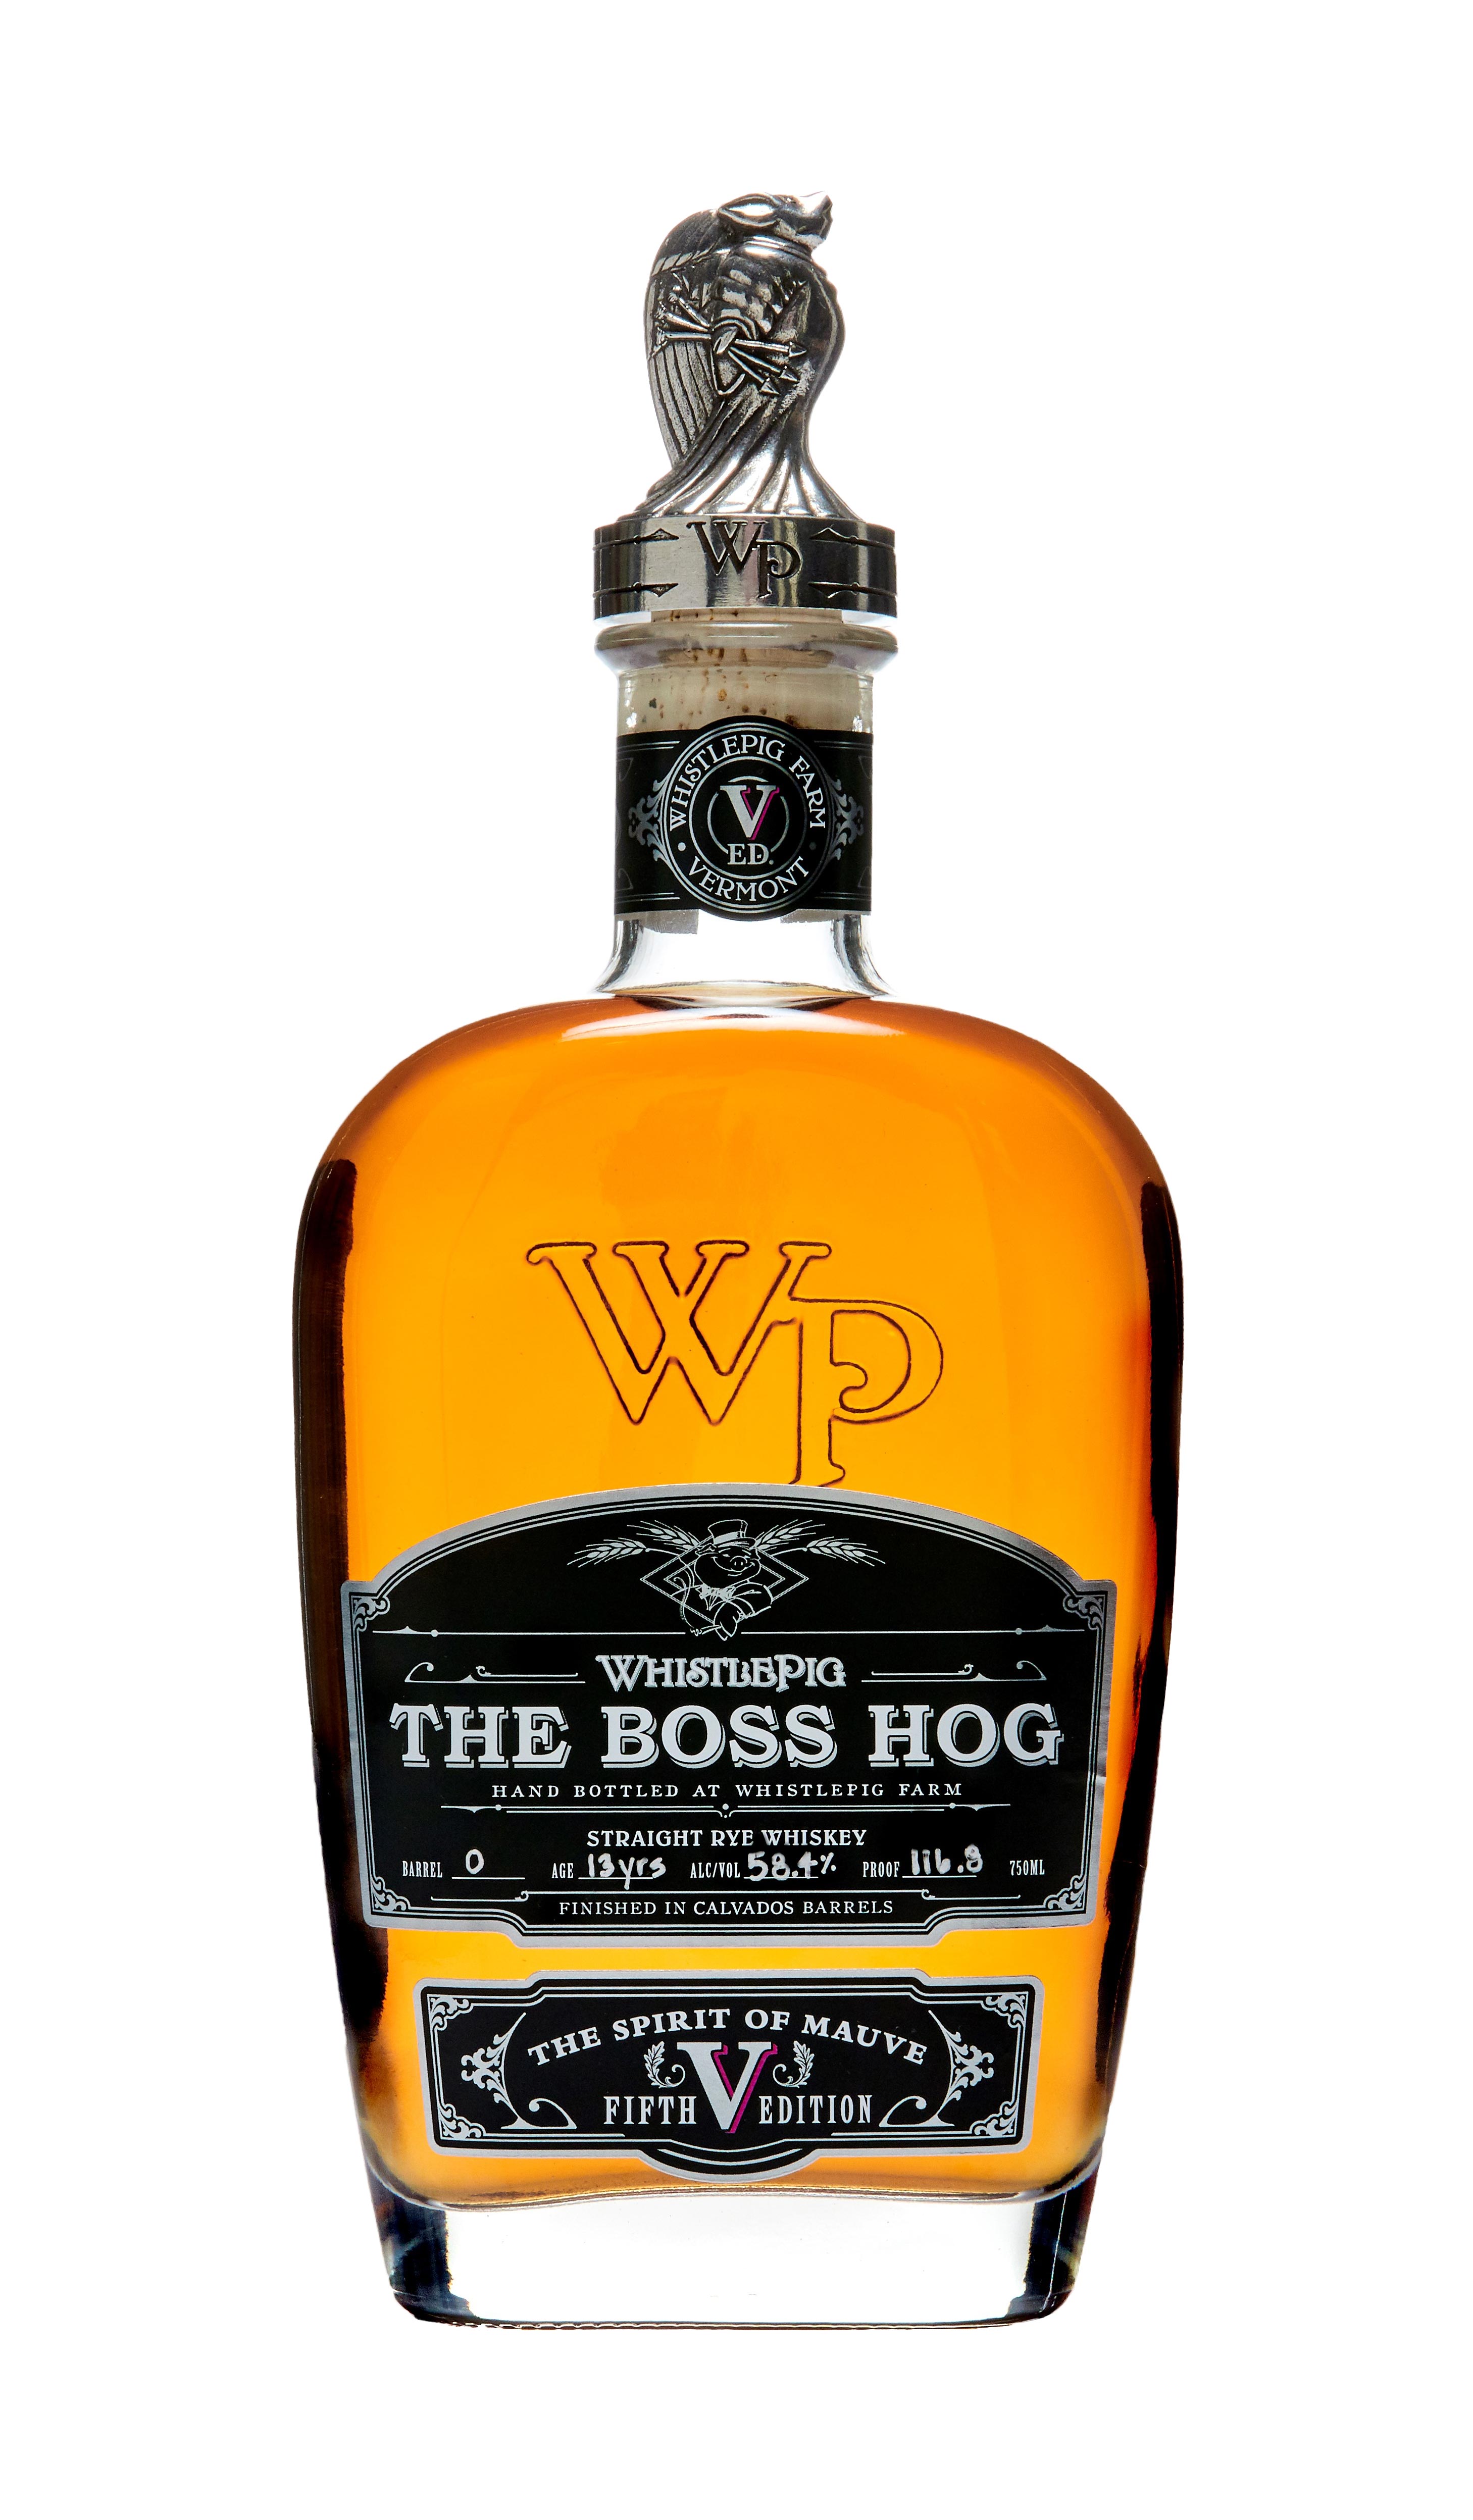 WhistlePig The Boss Hog Vth Edition: "The Spirit of Mauve"